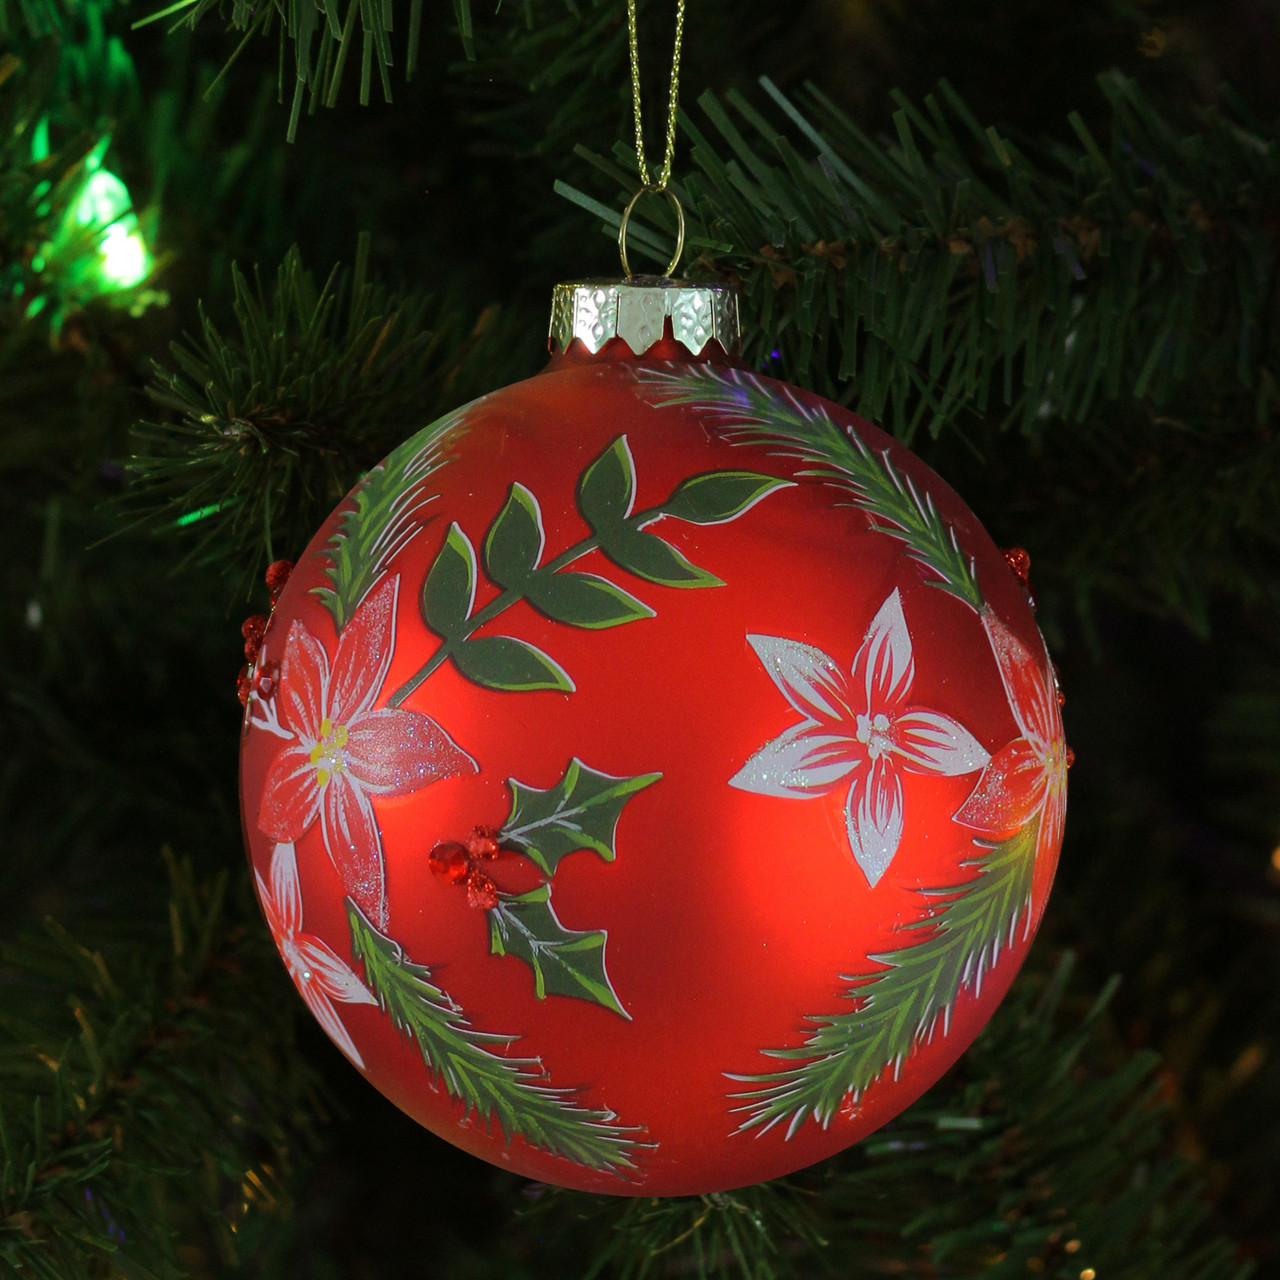 Mini Snowflake Christmas Balls Ornaments Small Christmas Tree Balls  Ornaments Shatterproof Bulbs Plastic Baubles Set Christmas Ornaments Set  Merry